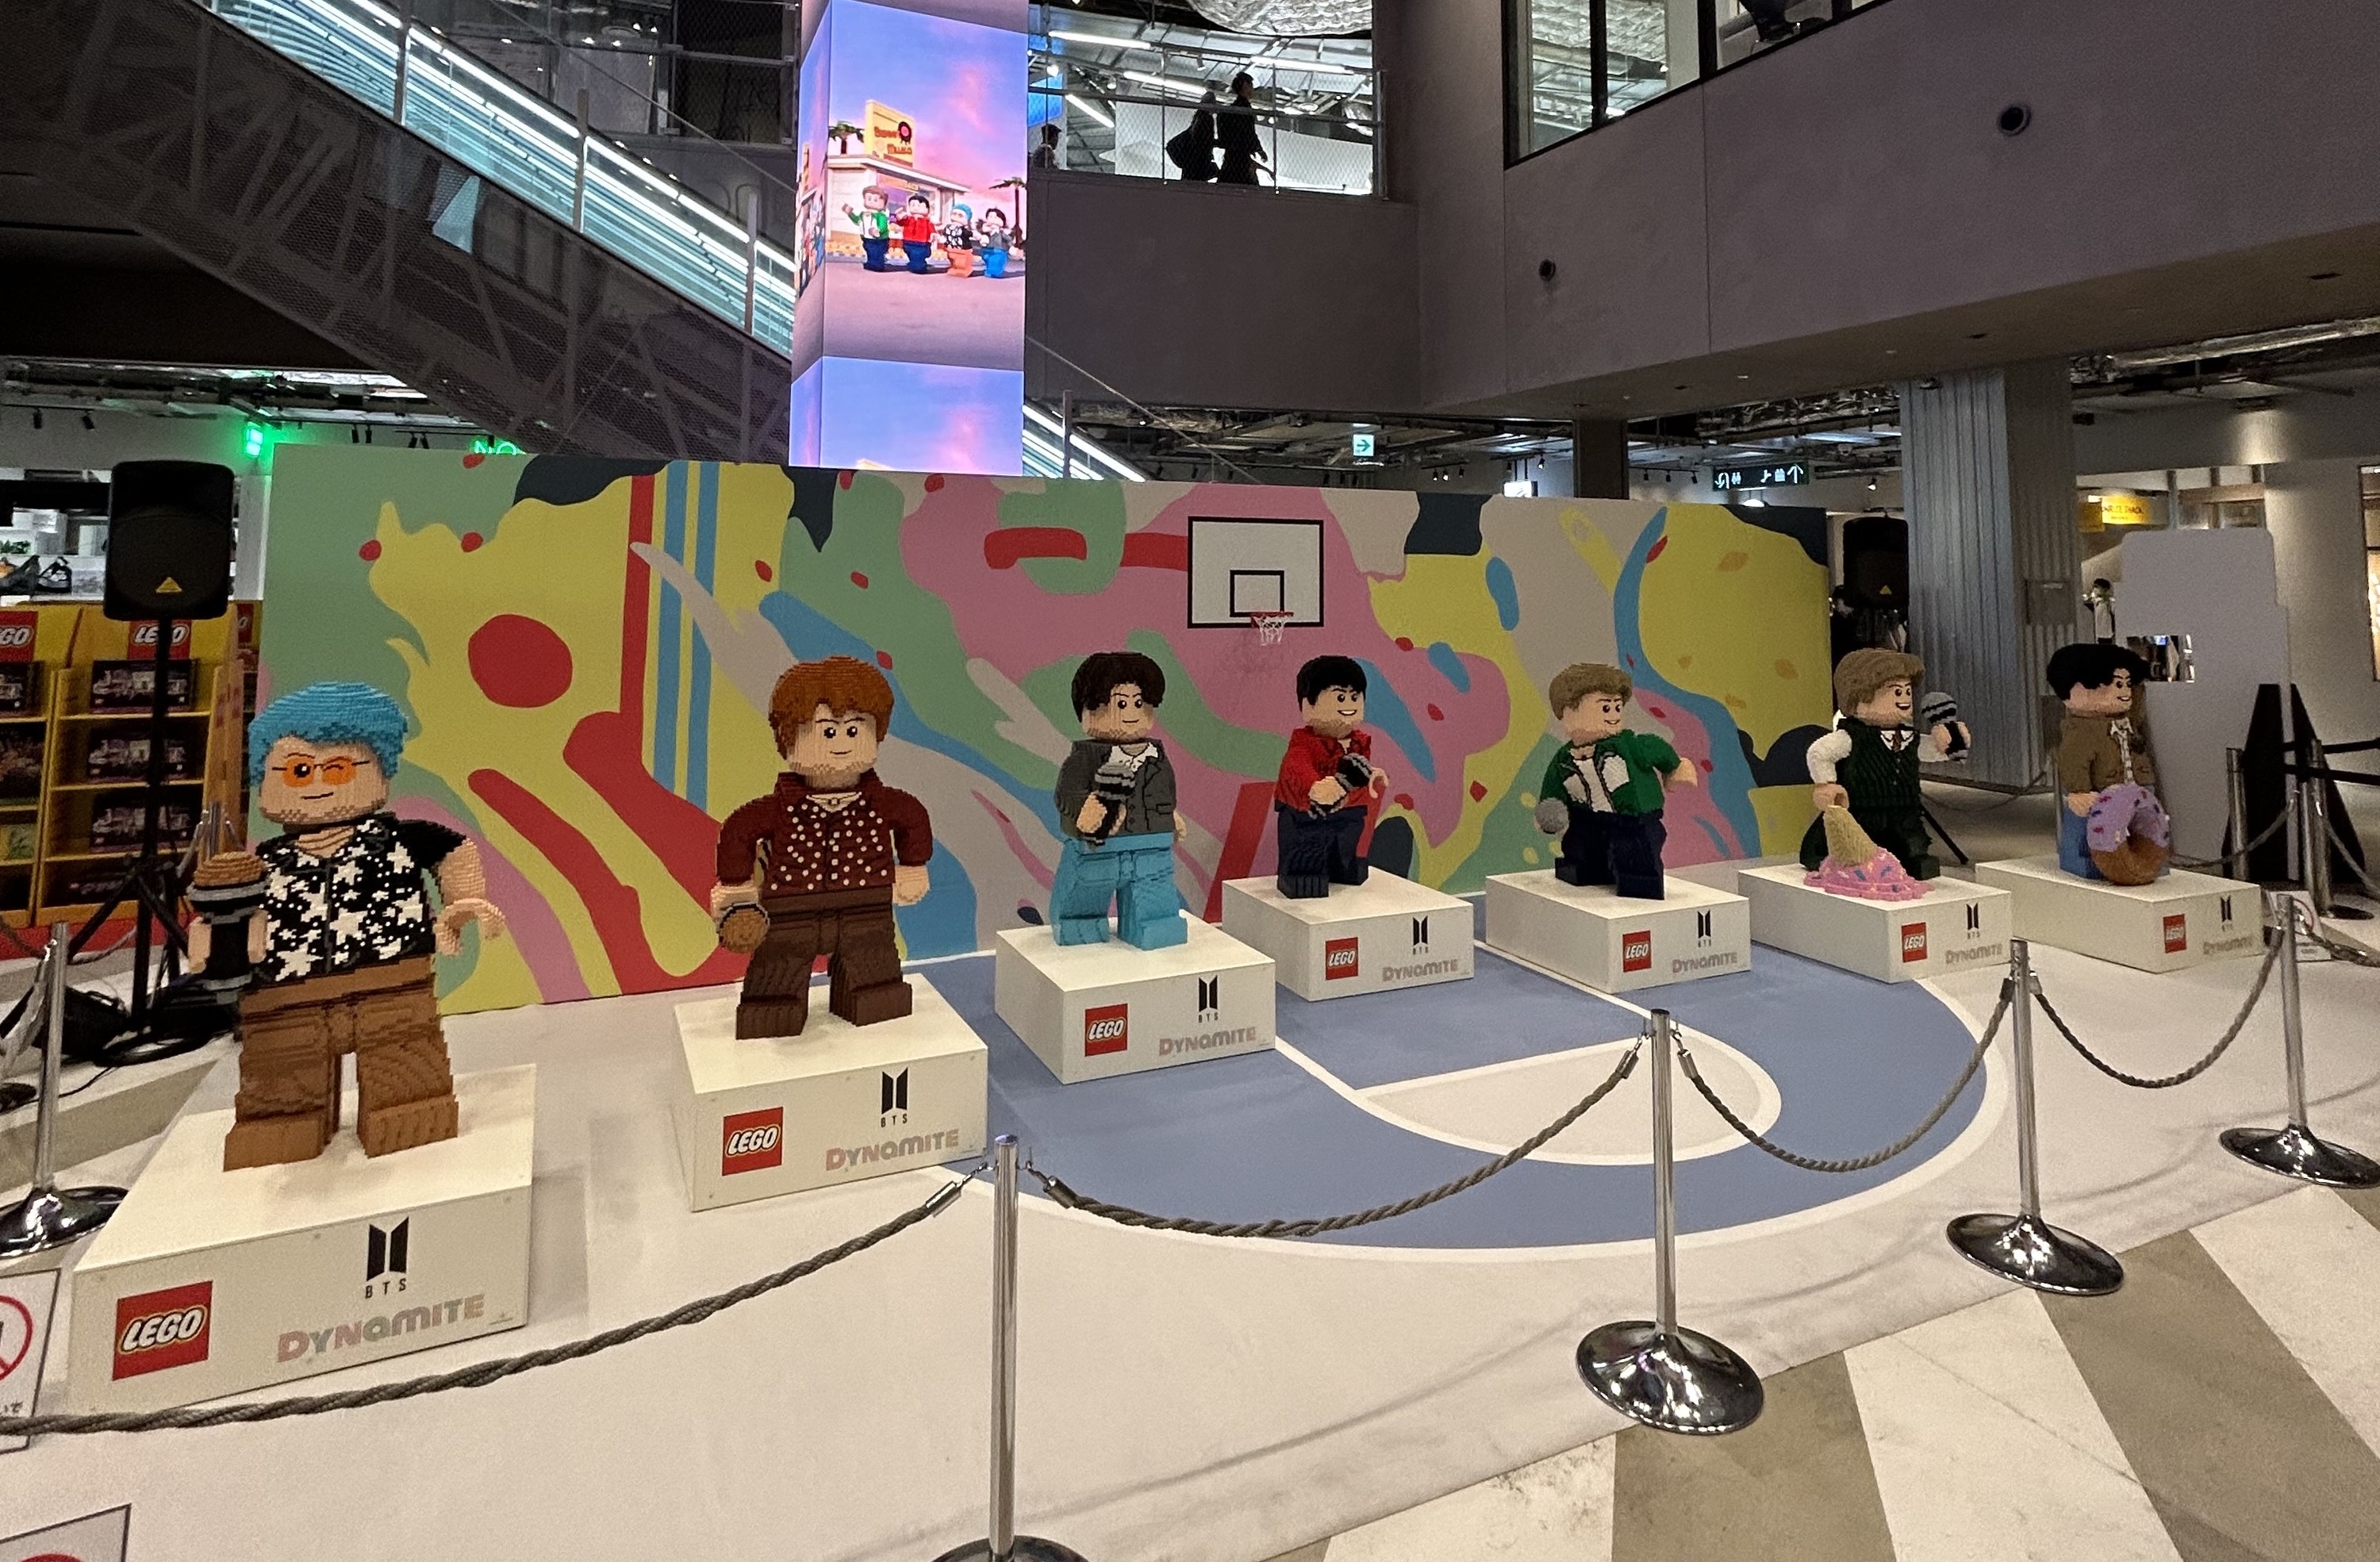 Lego BTS Dynamite Model Exhibition | Shopping in Tokyo